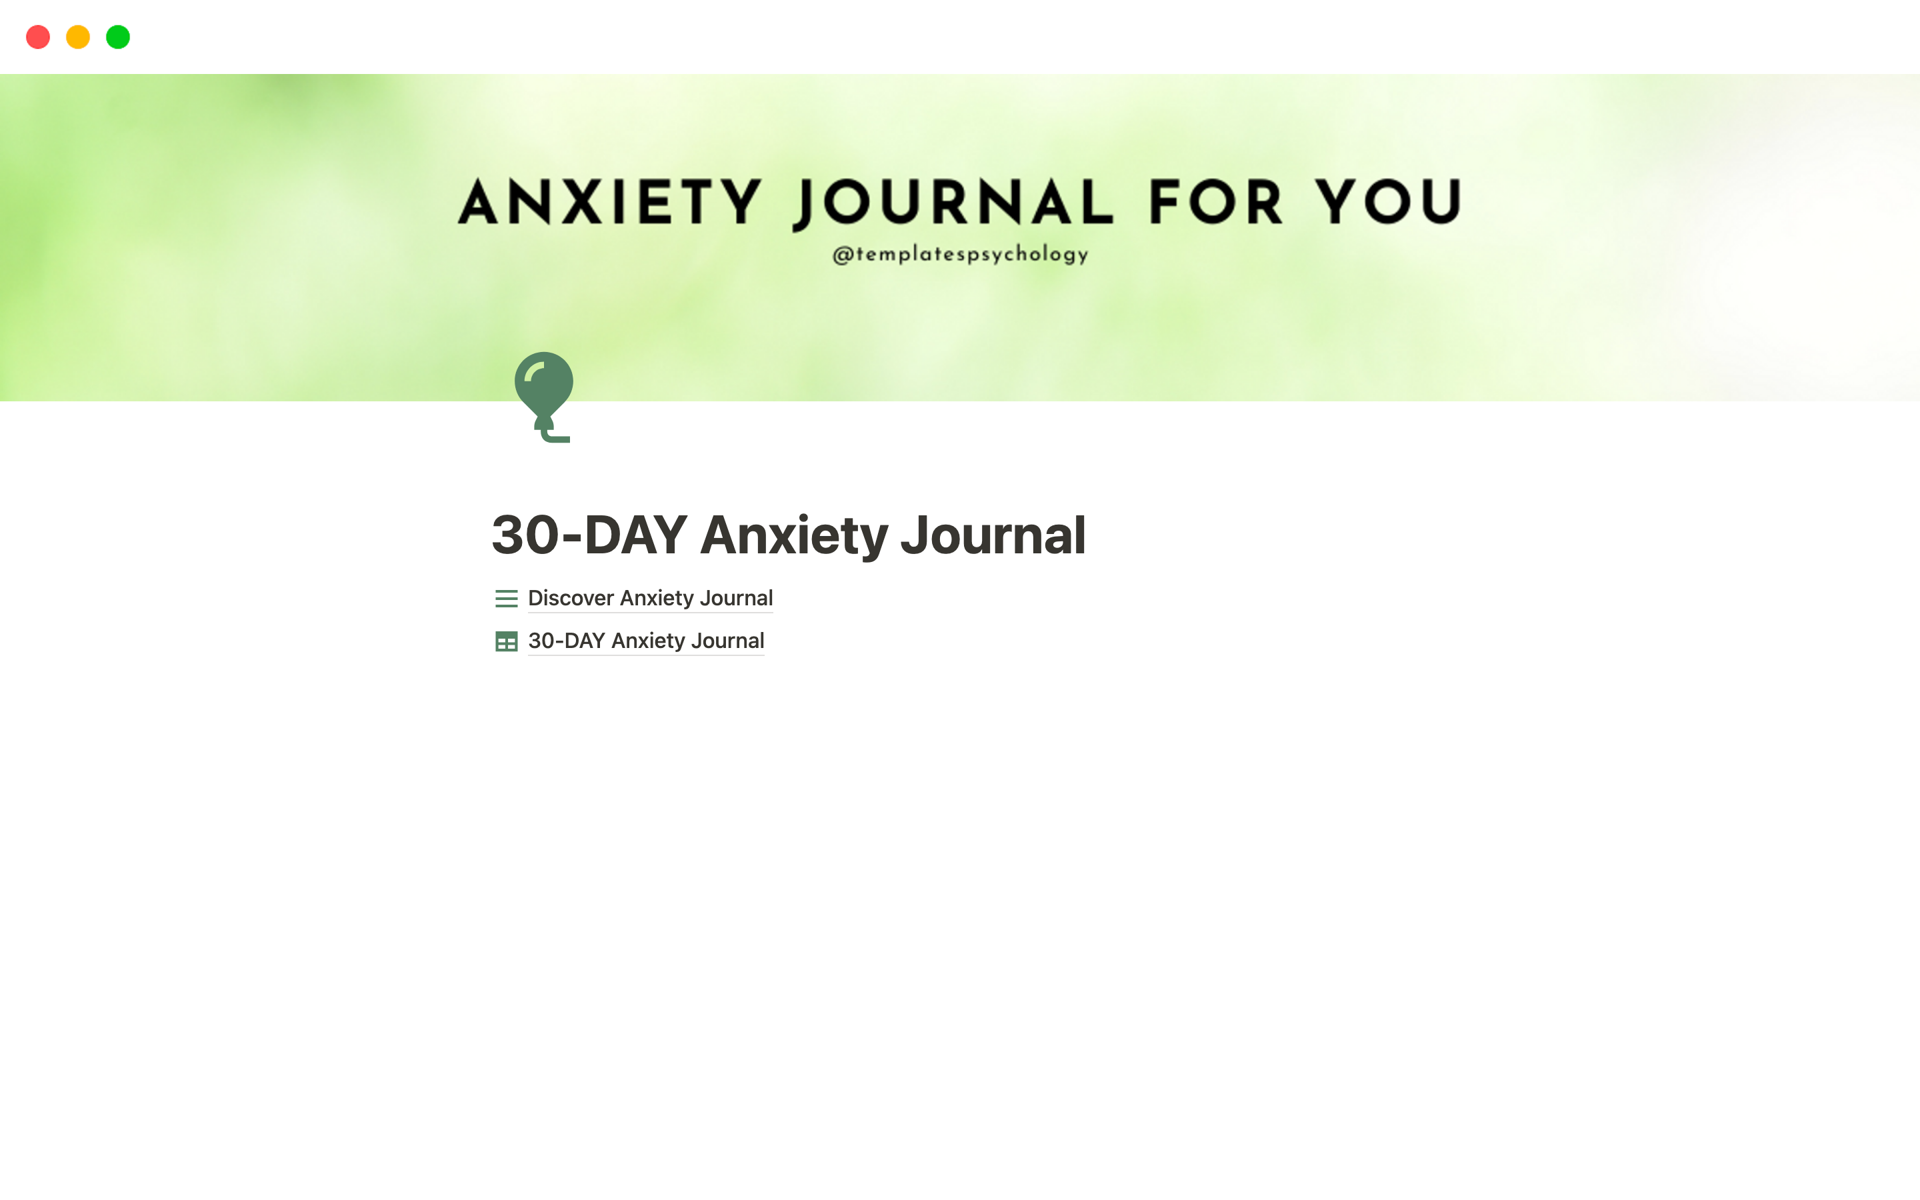 Uma prévia do modelo para 30-DAY Anxiety Journal